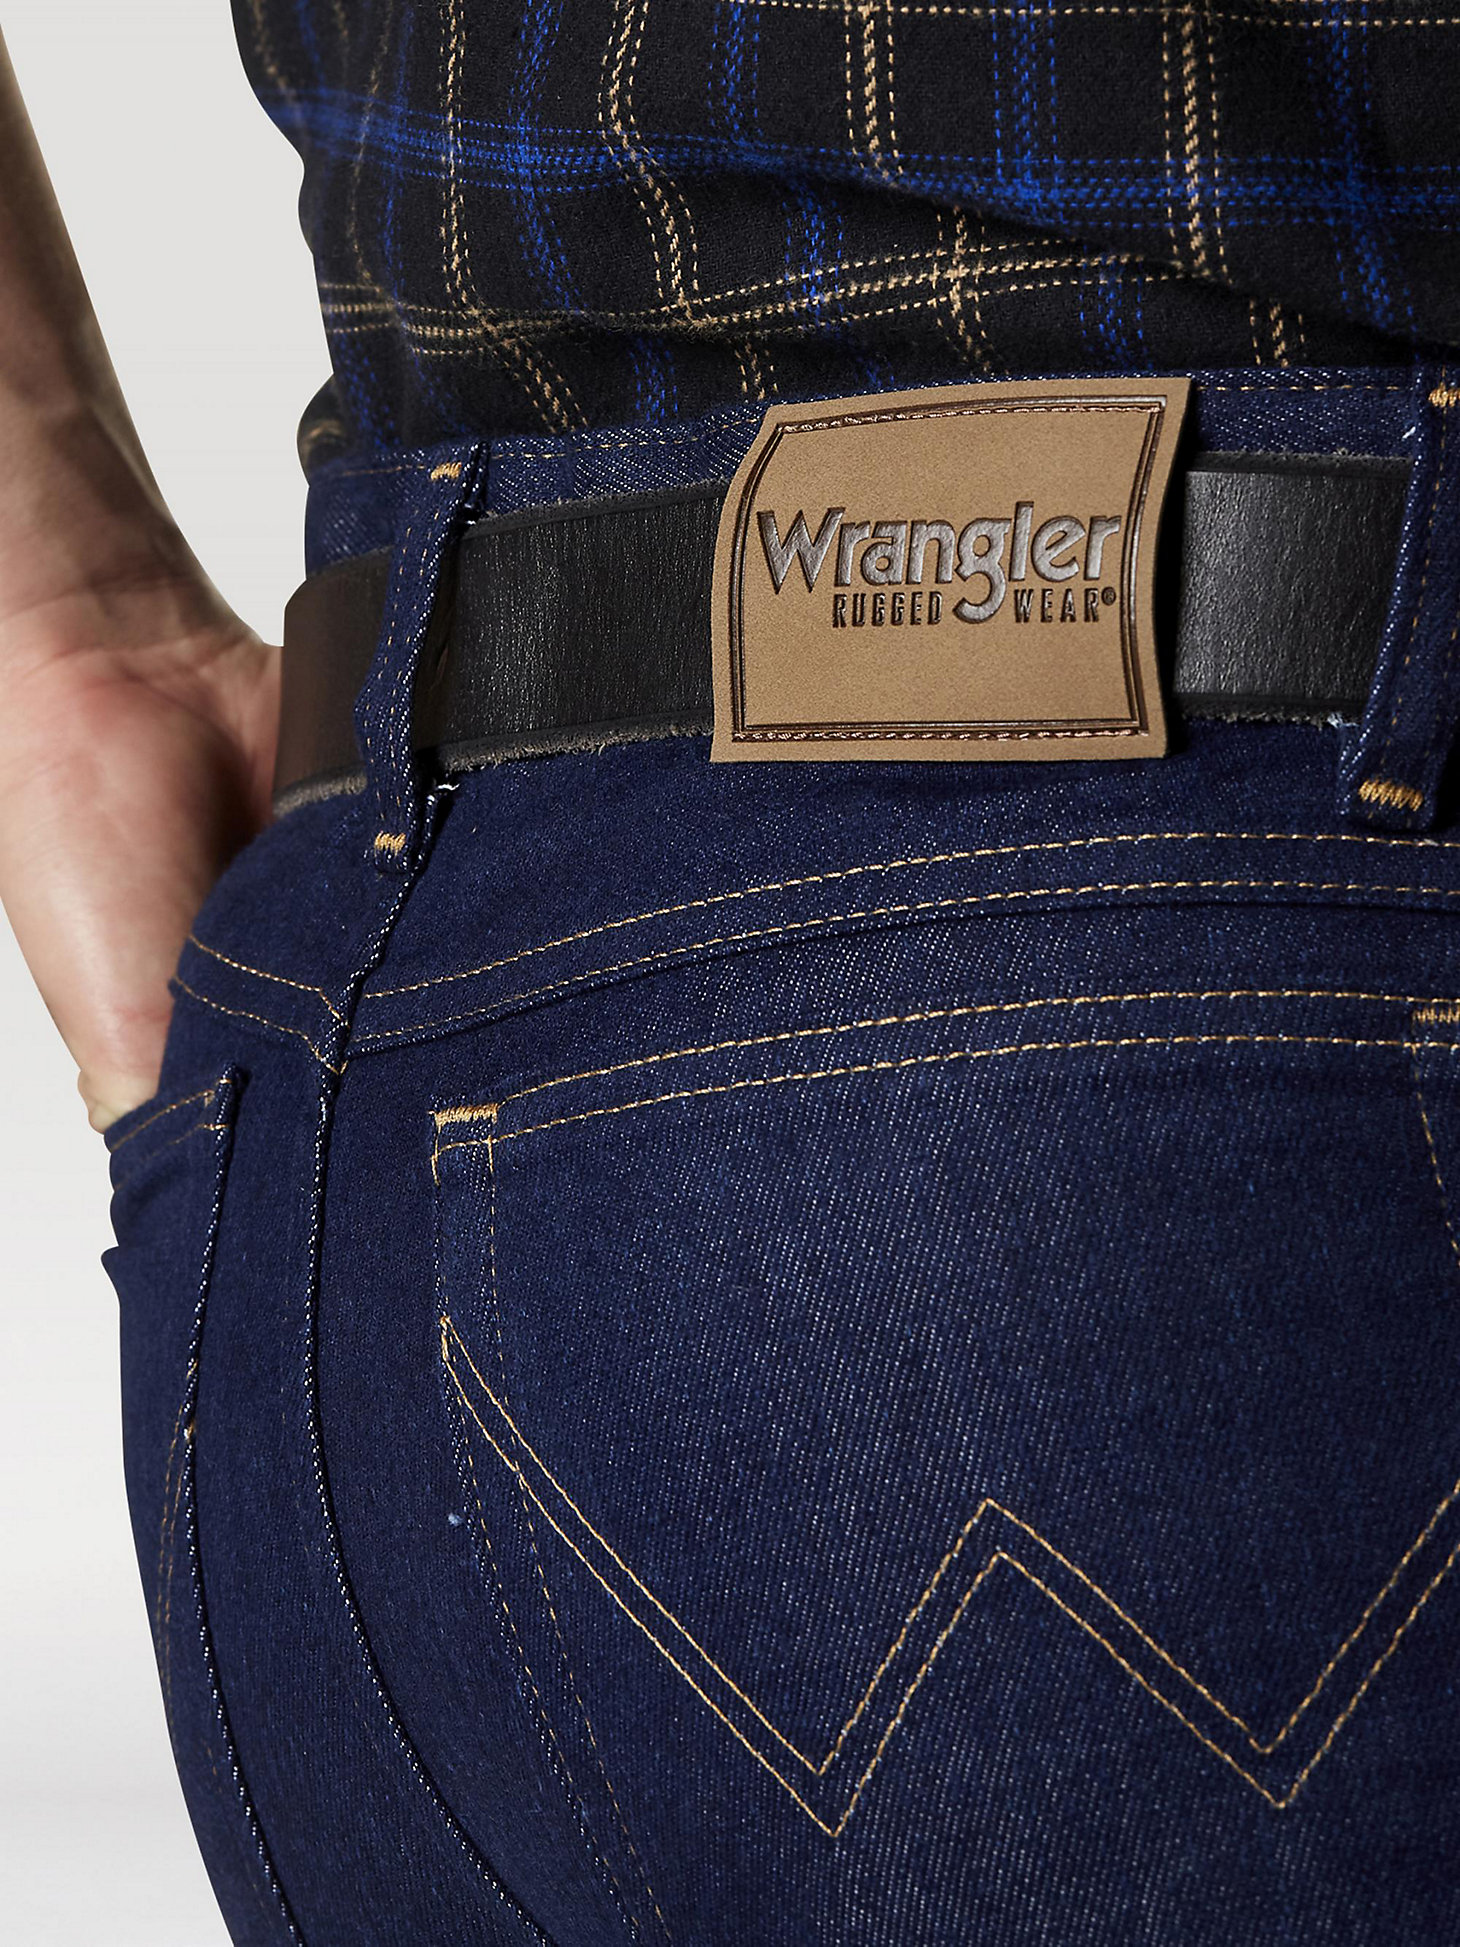 Wrangler Rugged Wear® Stretch Regular Fit Jean in Denim alternative view 3